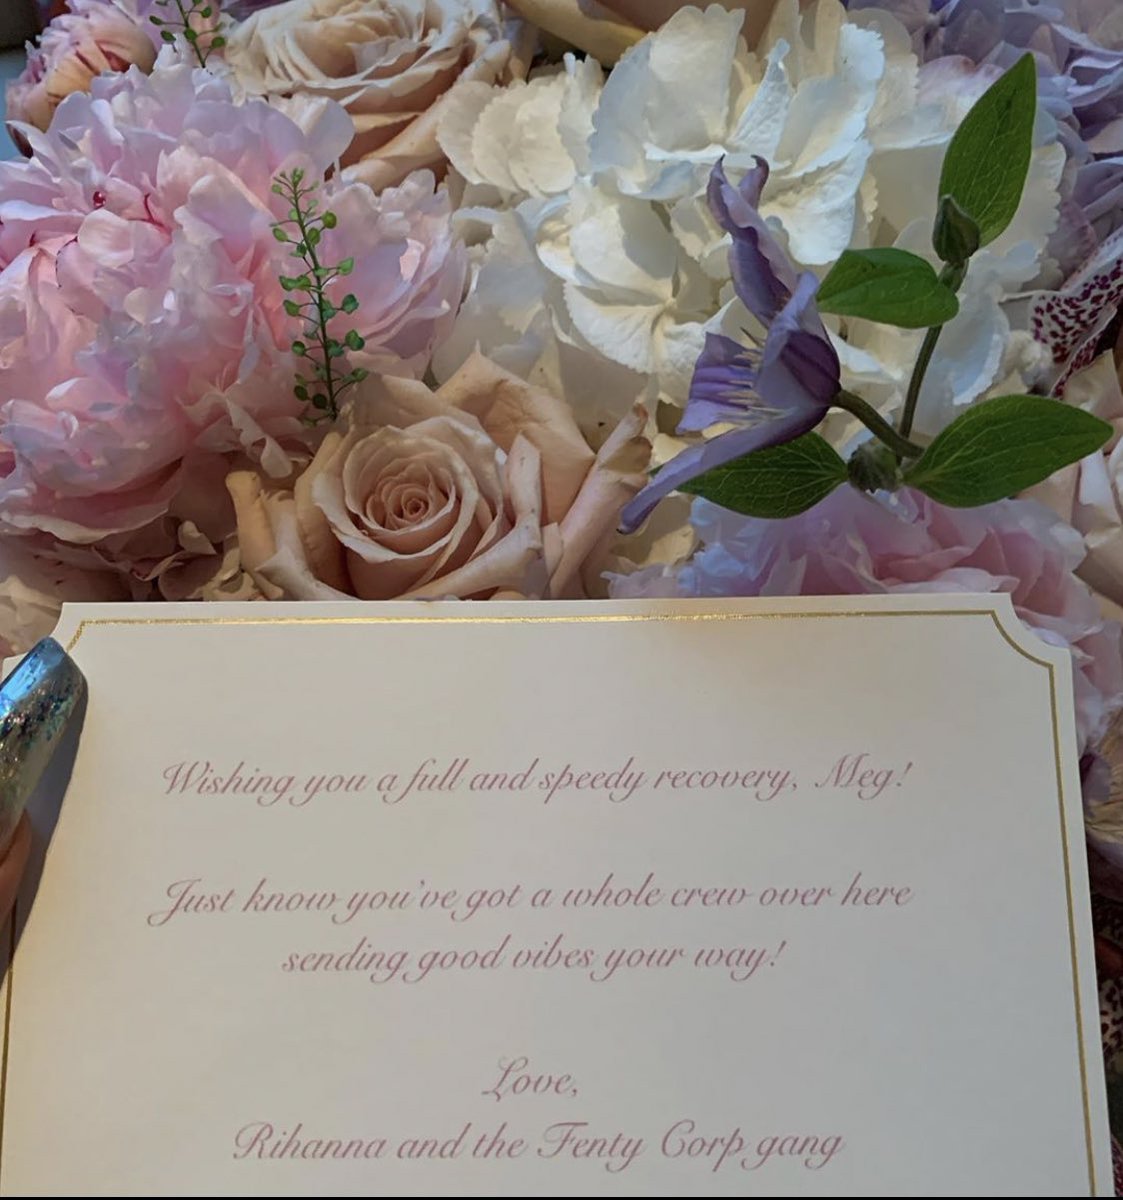 Beyoncé & Rihanna send Meg flowers accompanied with a message each after news breaks out that Meg thee Stallion has been shot.